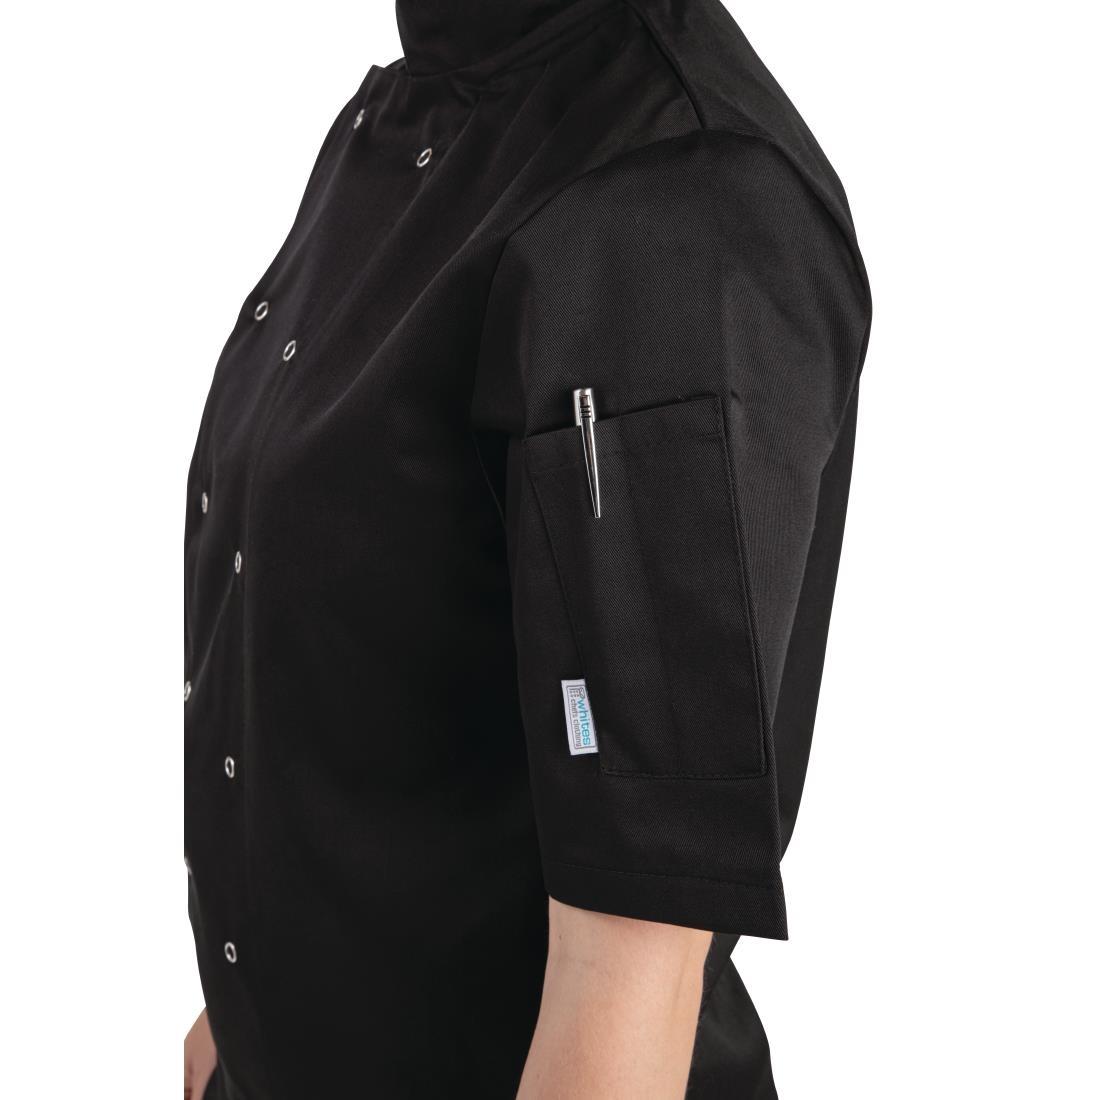 Whites Vegas Unisex Chefs Jacket Short Sleeve Black S - A439-S  - 4